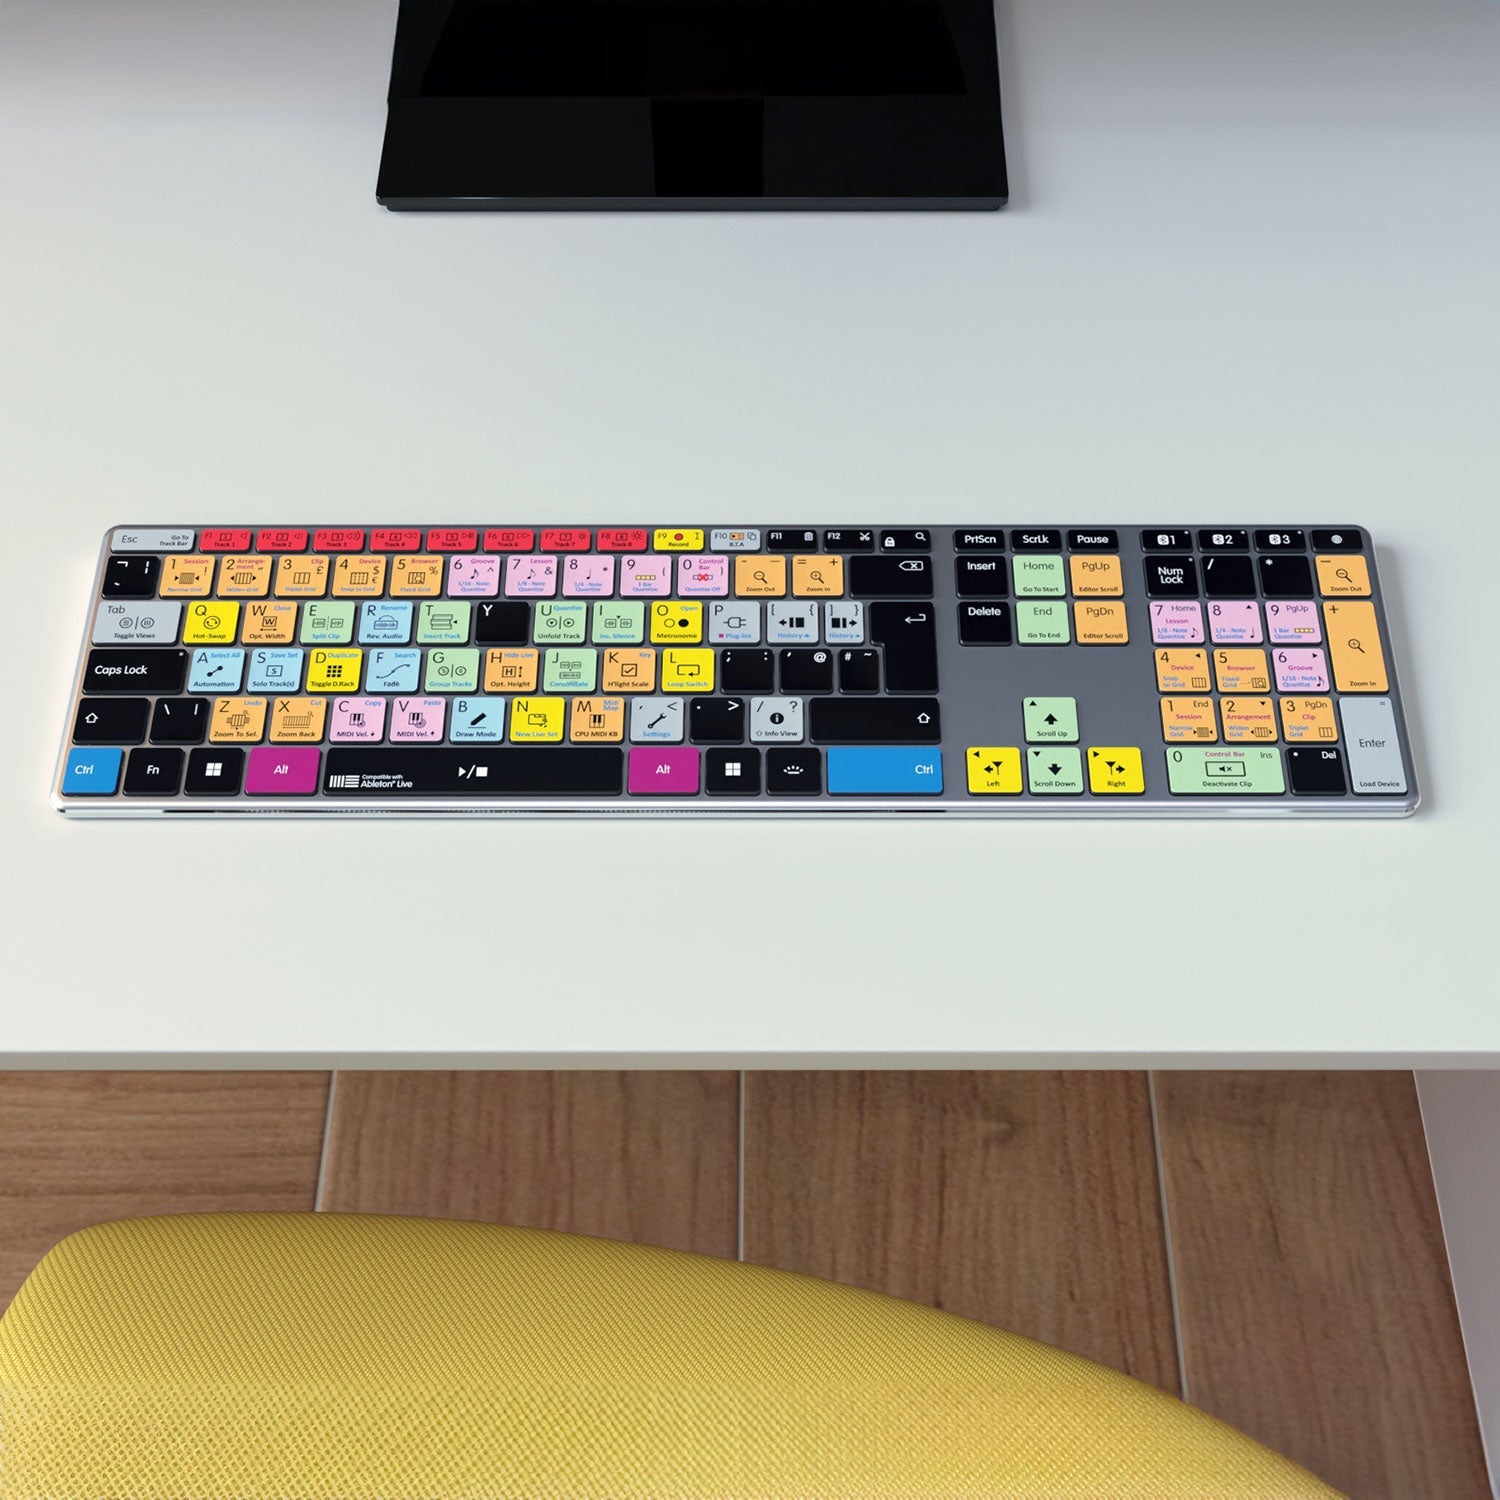 NEW Ableton Live Keyboard | Backlit & Wireless | Mac and PC - Editors Keys